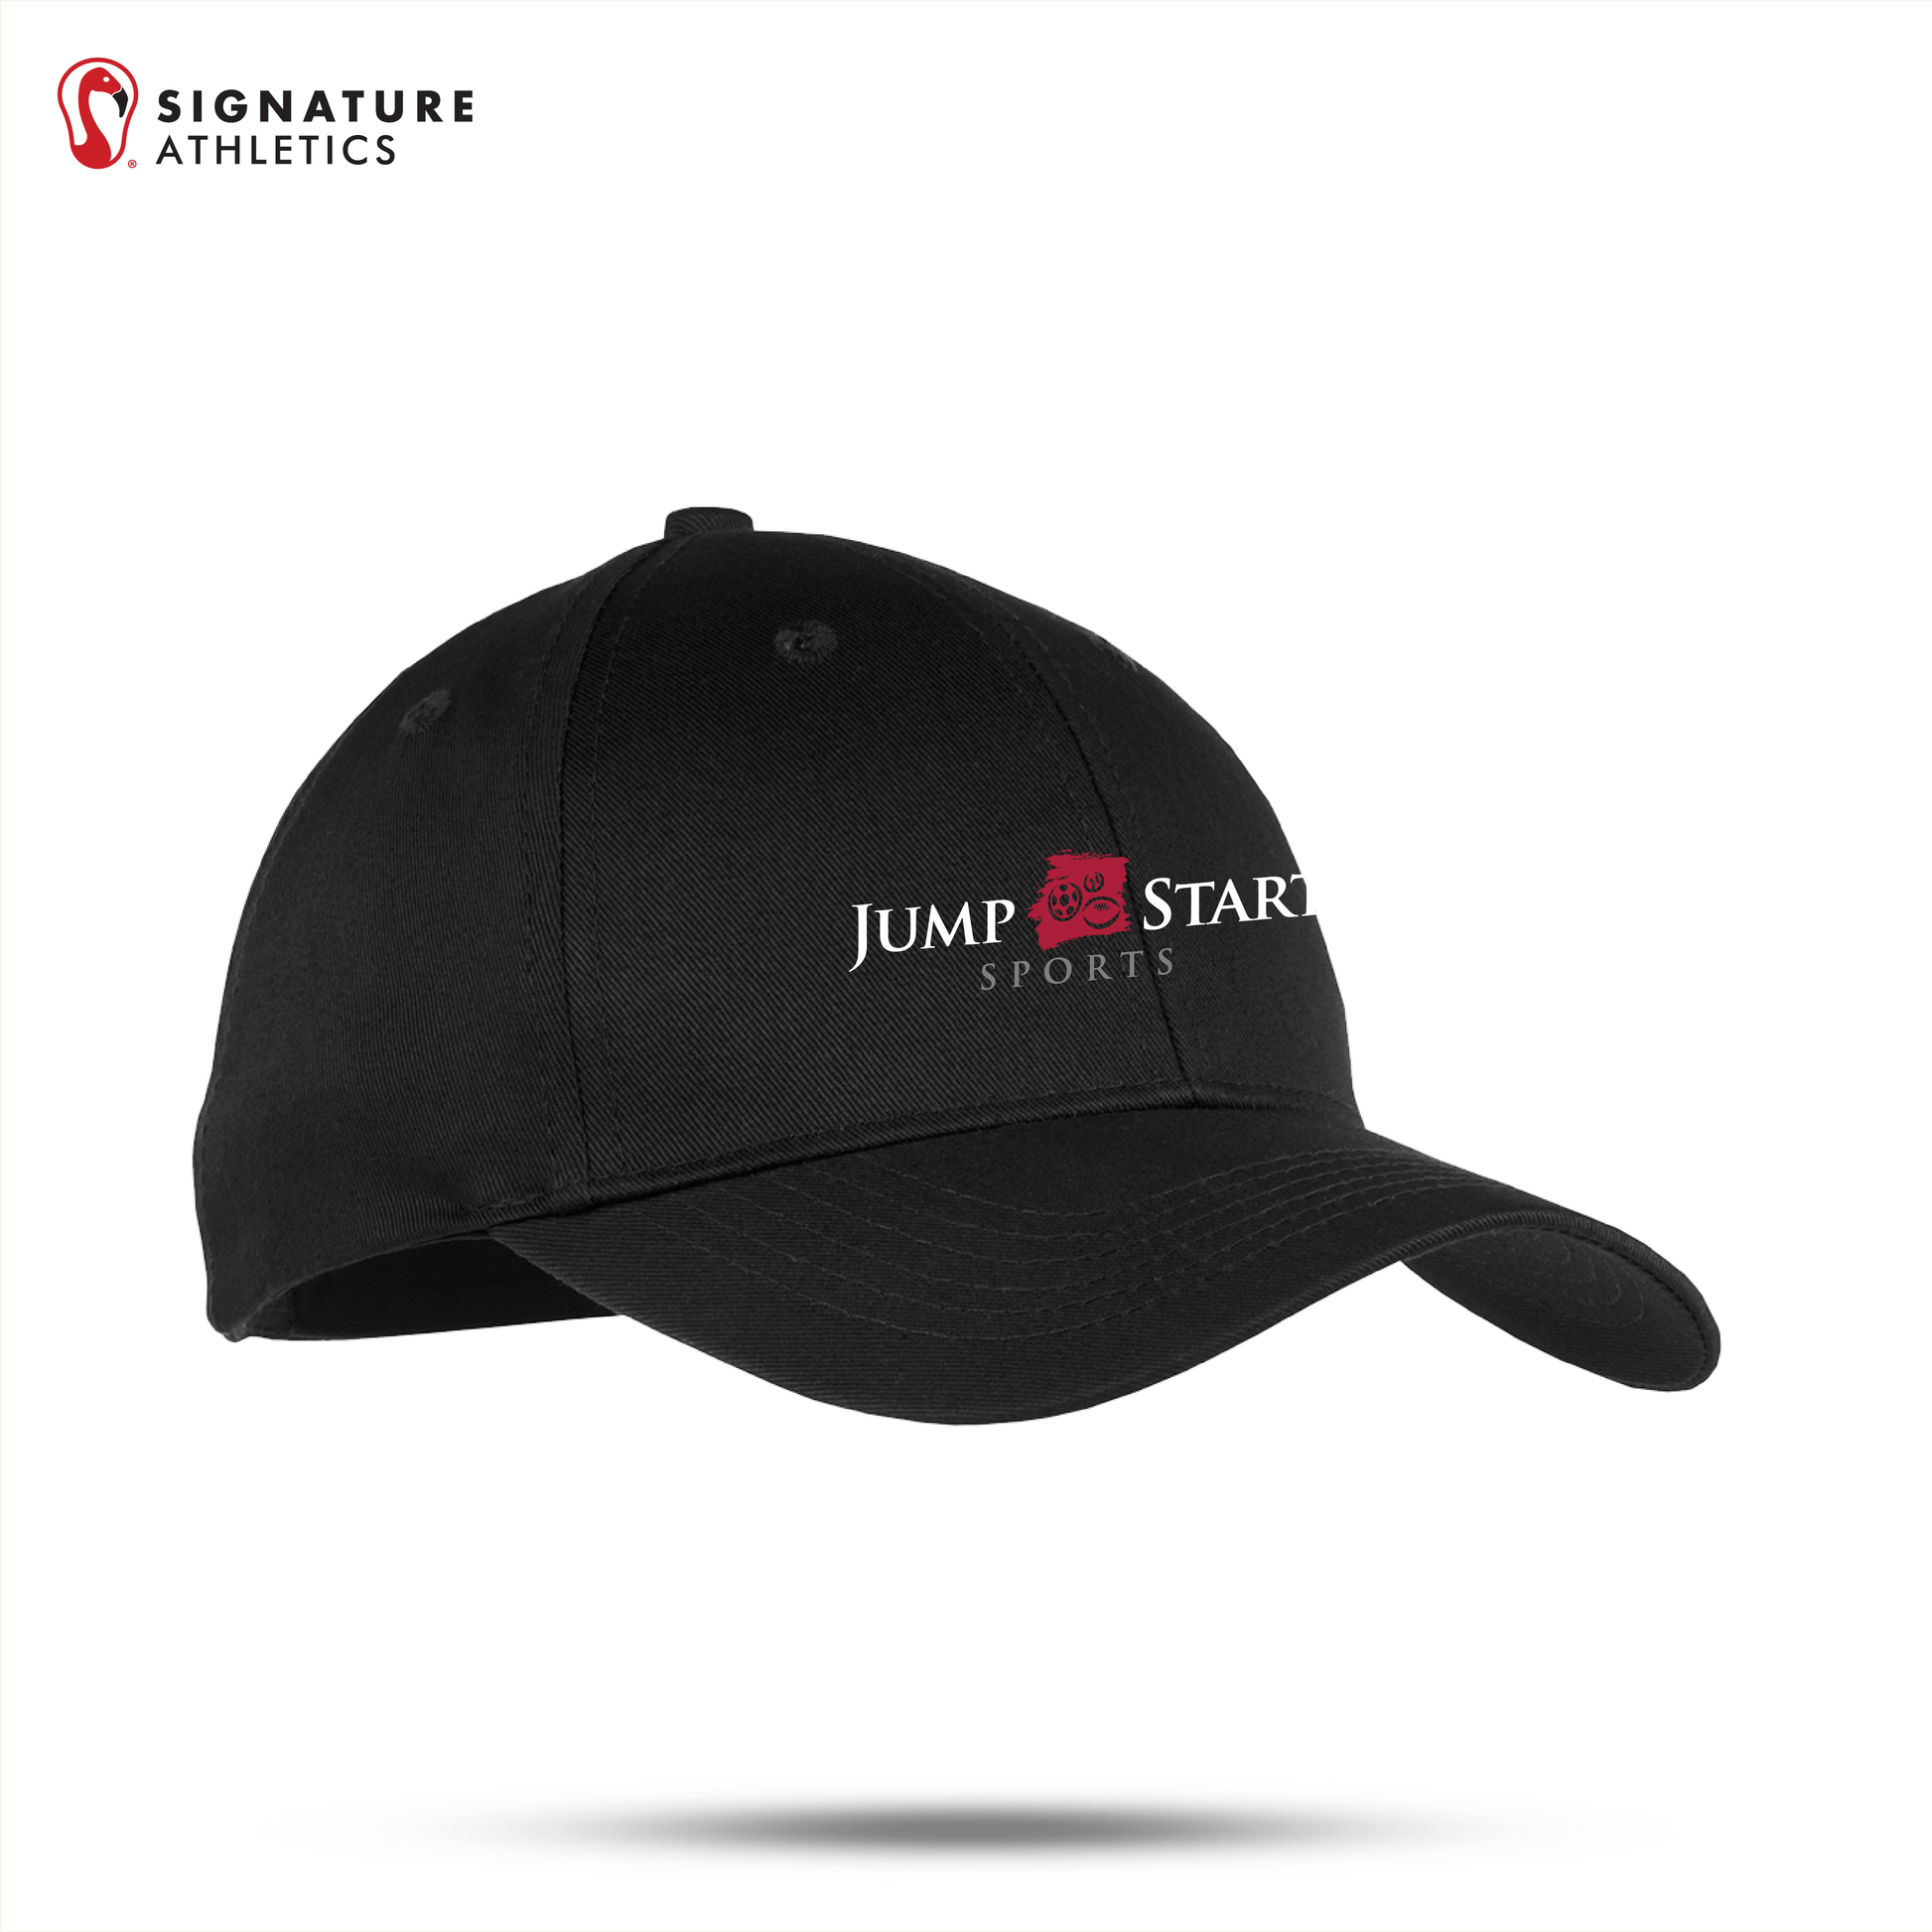 [BULK] Jump Start Sports Adult Hats - 144 ct Master Pack Signature Lacrosse